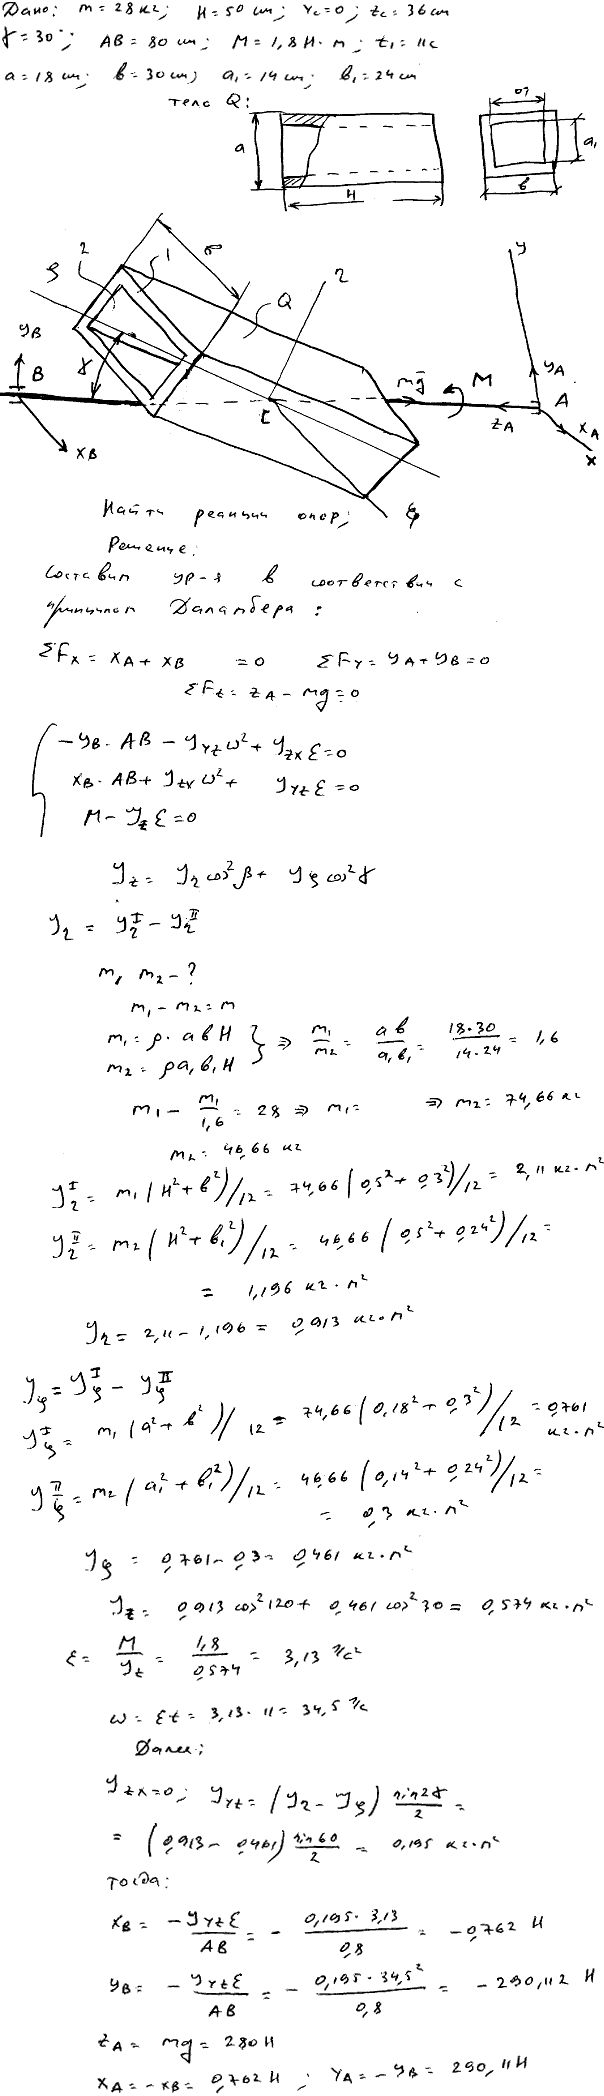 Задание Д.17 вариант 12. m=28 кг; H=50 см; yC=0 zC=36 см; γ=30 град; AB=80 см; M=1,8 Н*м; t1=11,0 с; a=18 см, b=30 см, a1==14 см, b1==24 см